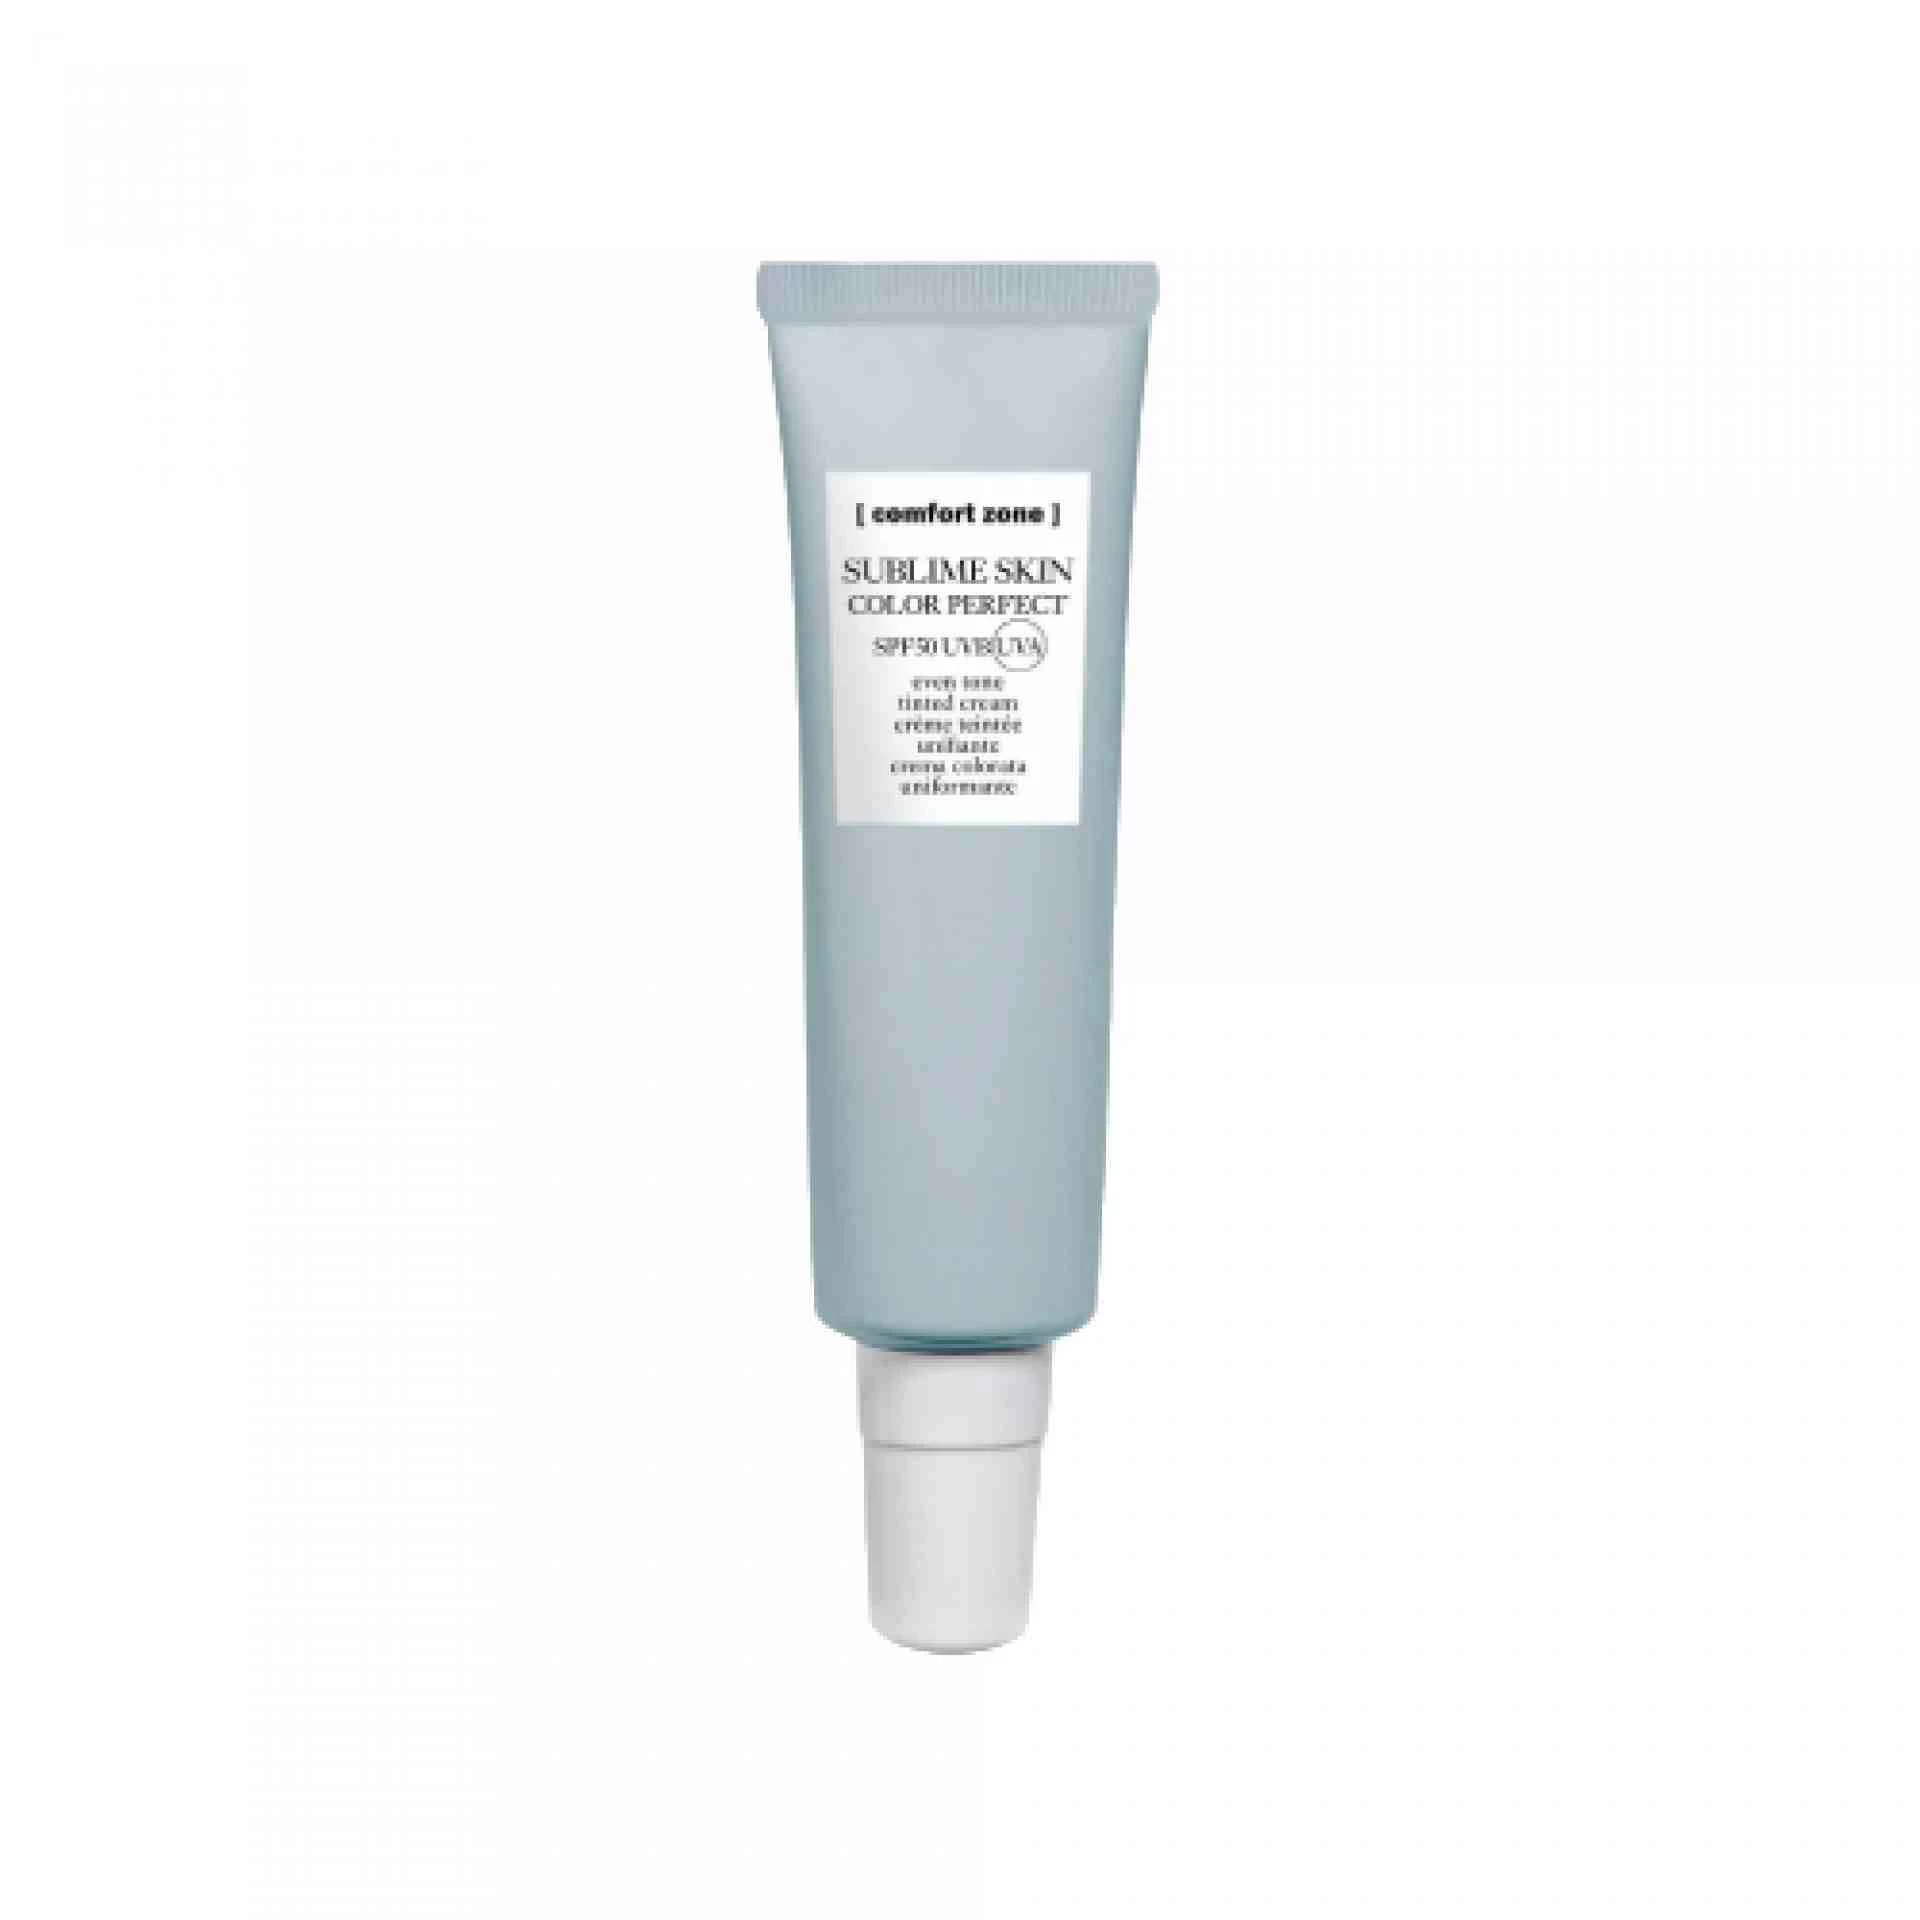 SUBLIME SKIN COLOR PERFECT SPF50 | Crema facial SPF50 40 ml - Sublime Skin - Comfort Zone ®